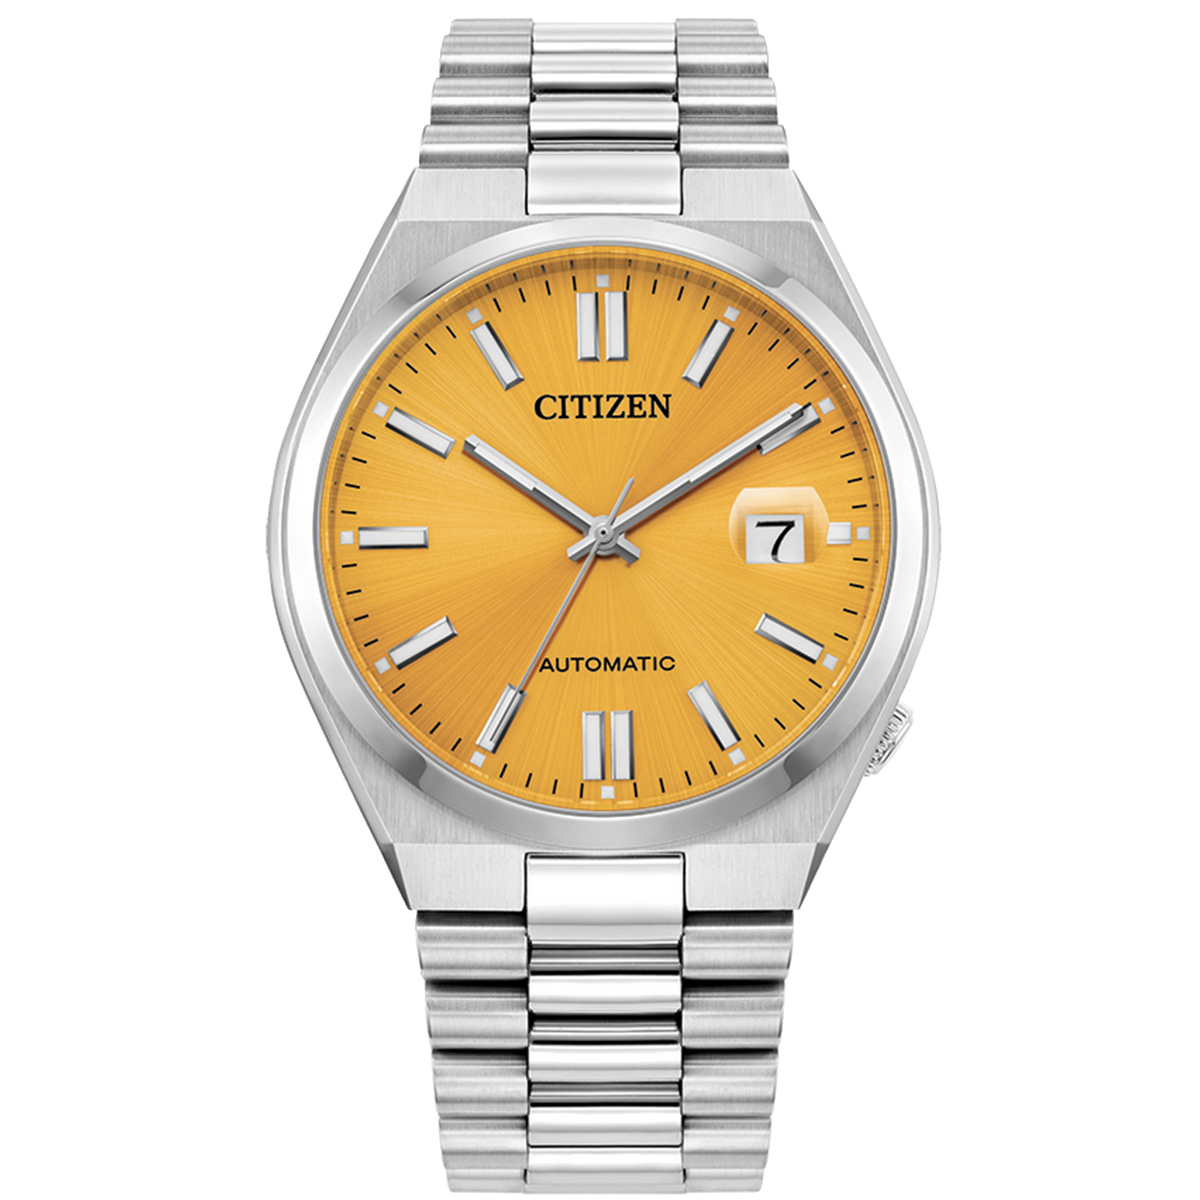 Citizen Automatic - ‘TSUYOSA’ - Yellow Dial